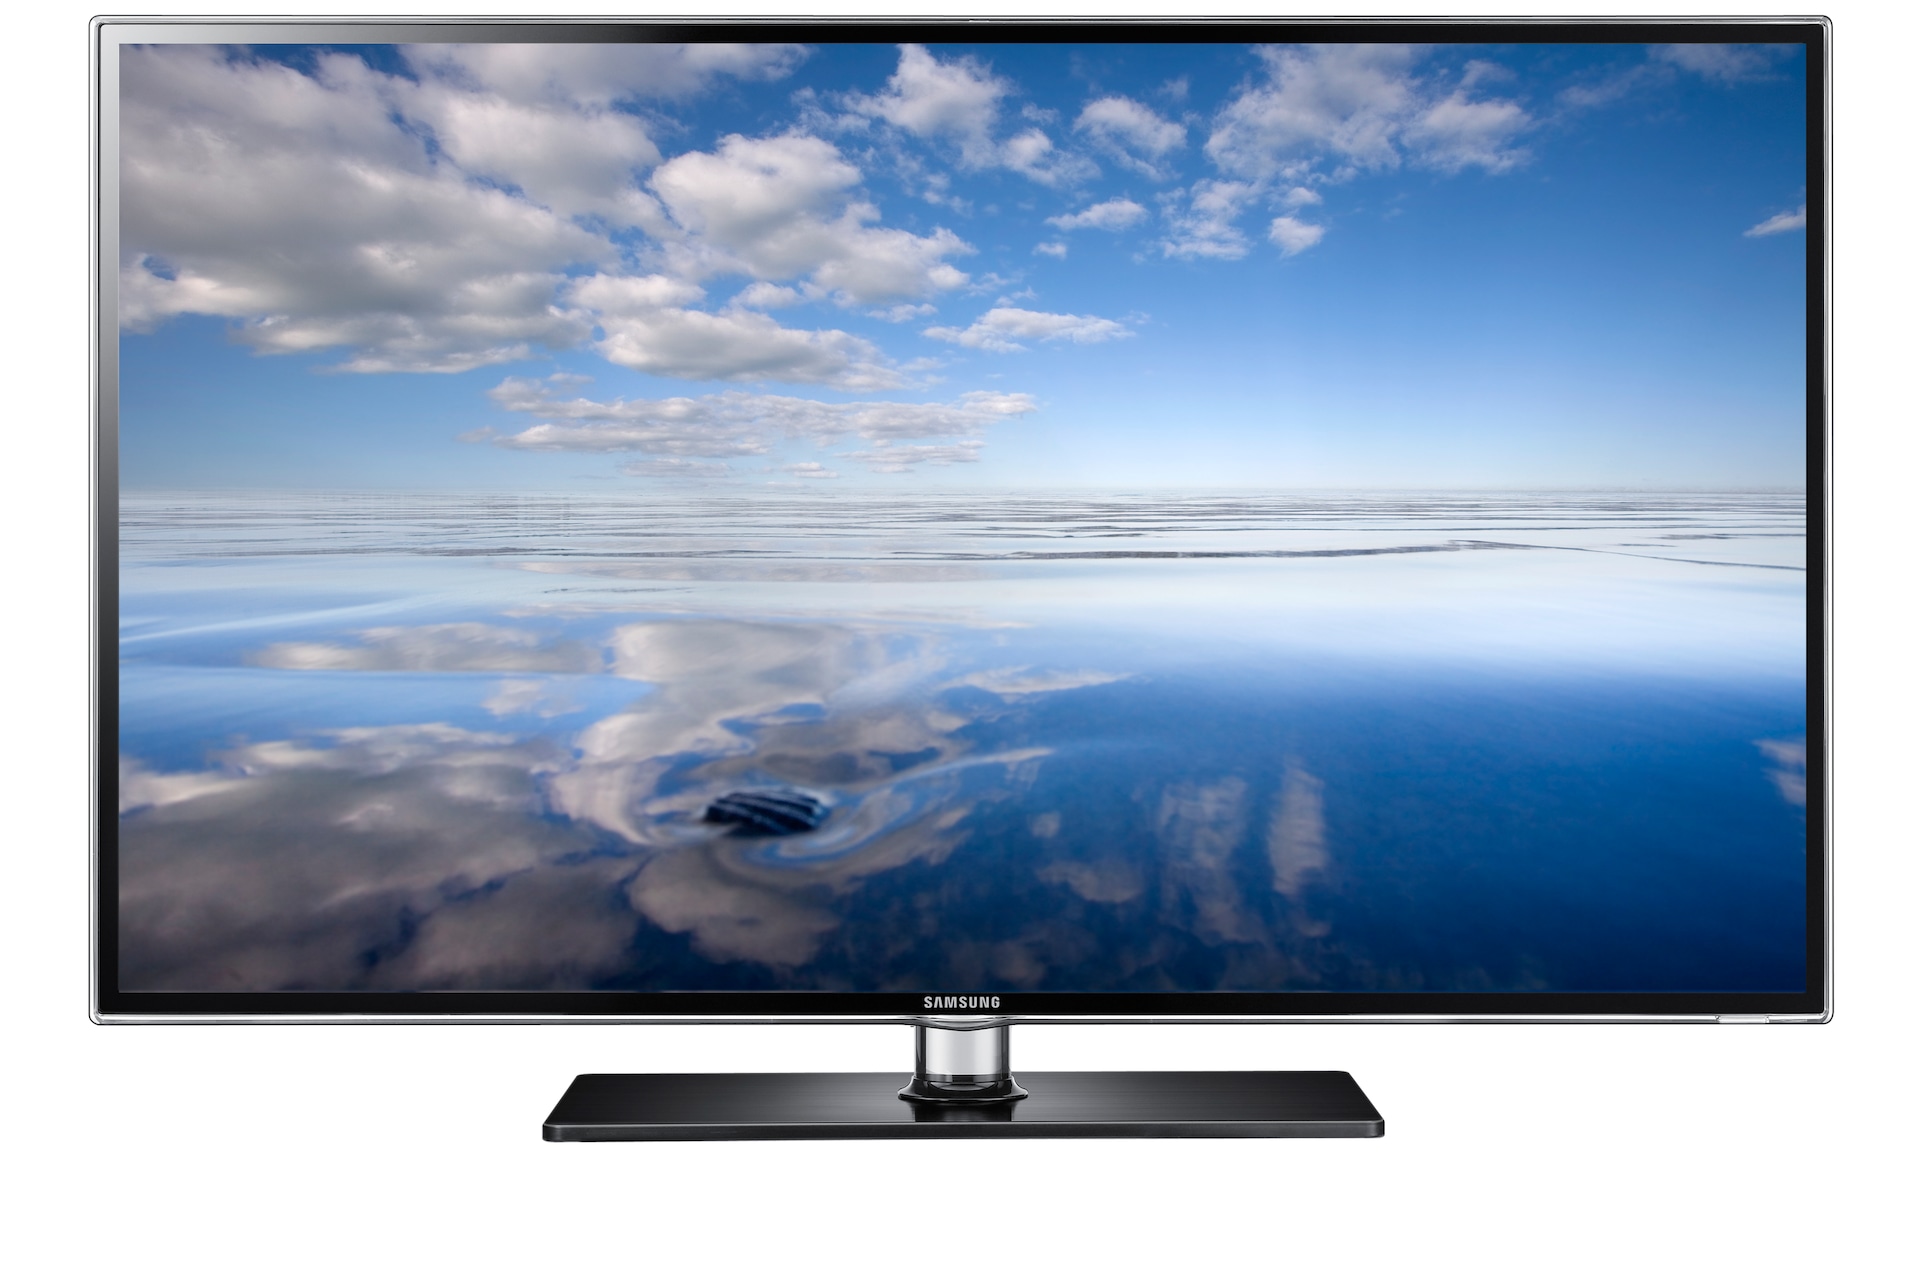 46" 6900 Series smart 3D full HD 1080p LED TV | Samsung ...